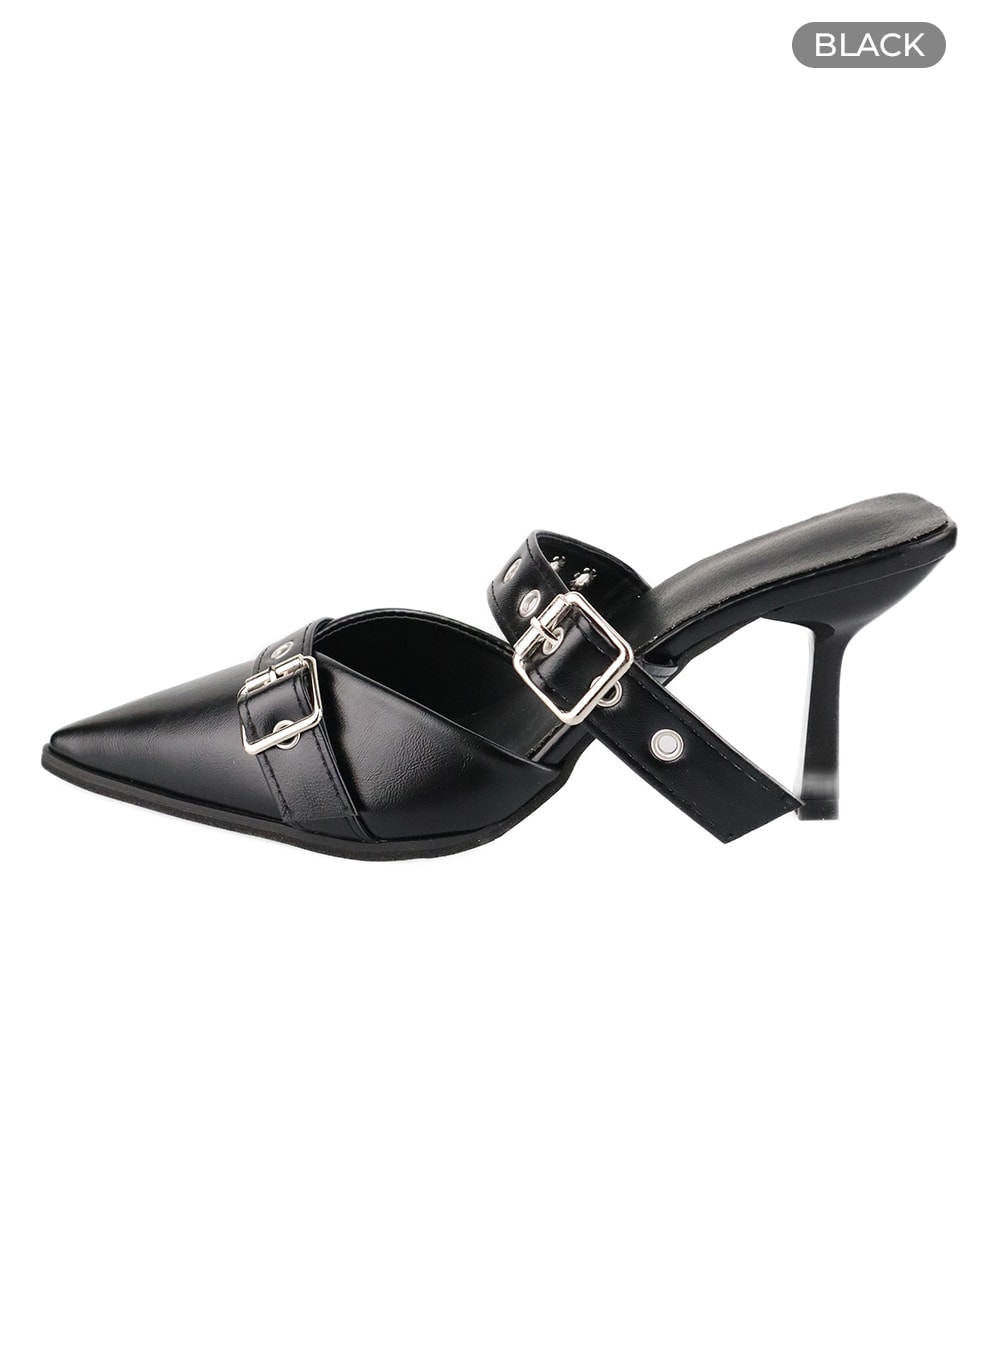 metallic-buckle-stiletto-heels-cm422 / Black